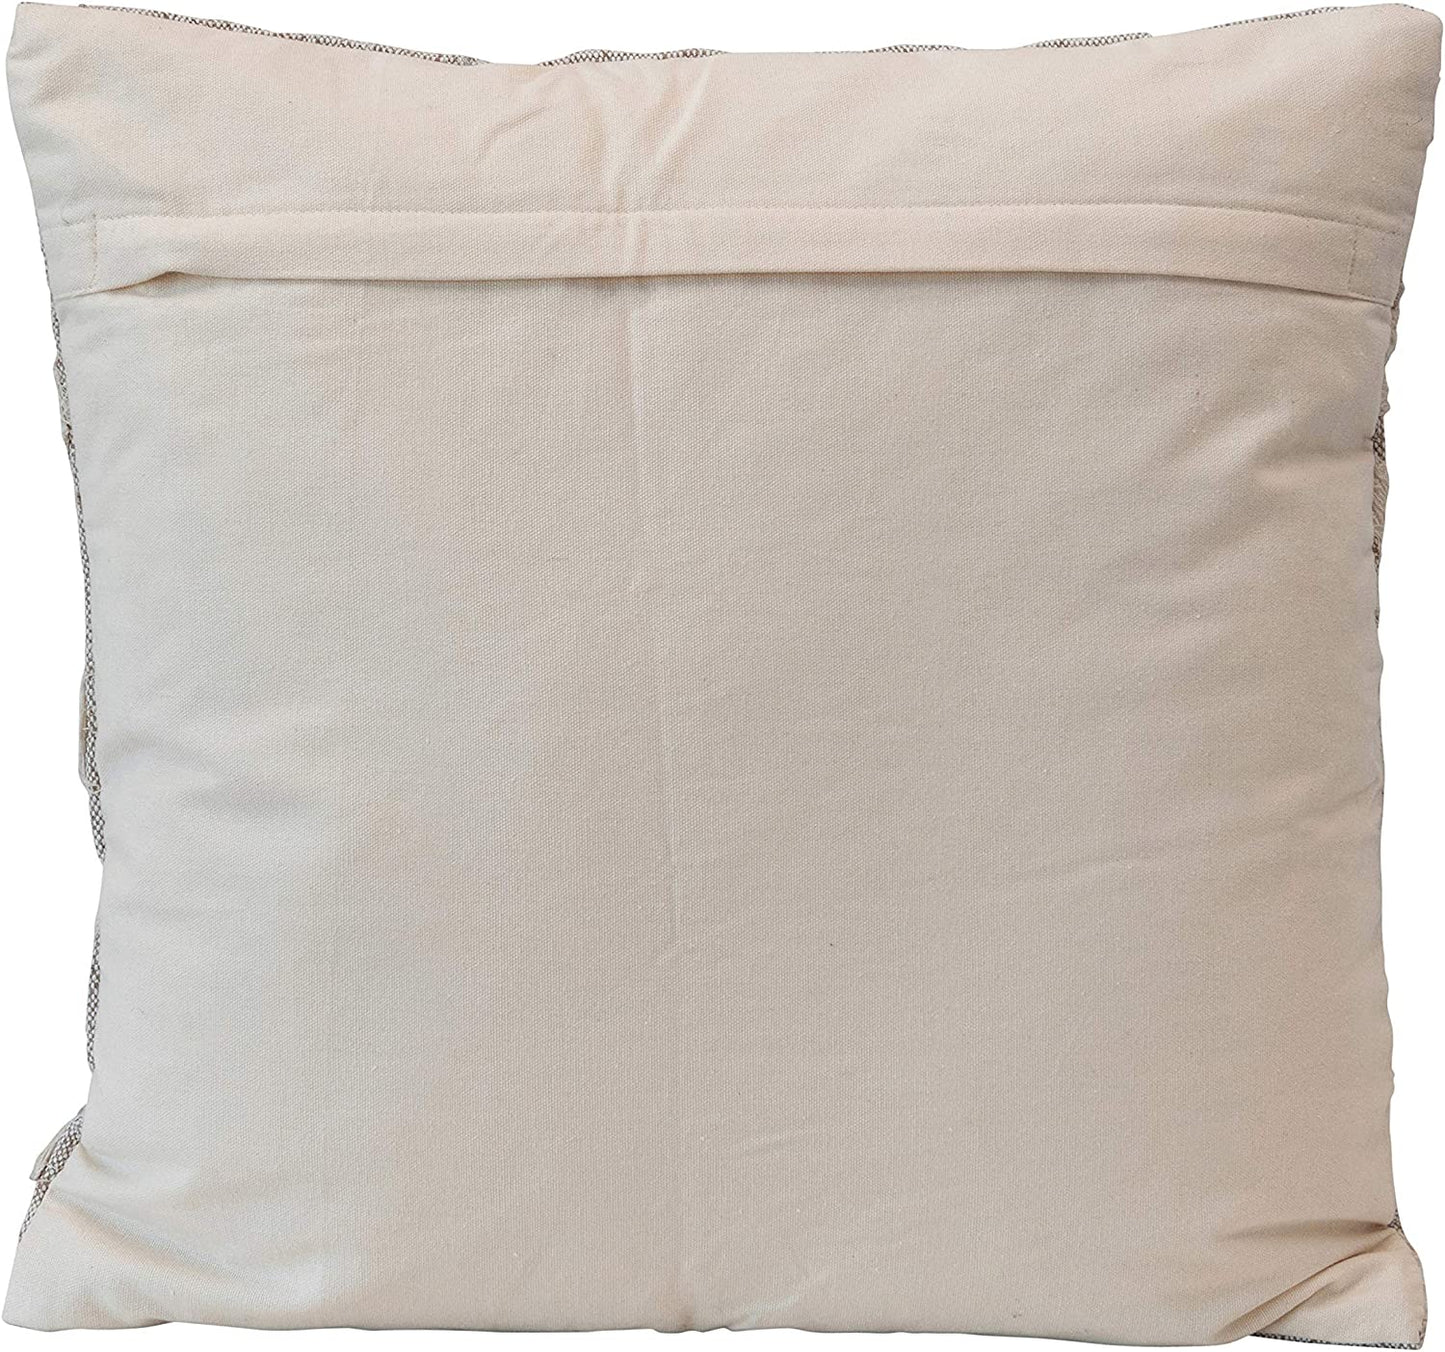 20" Jute Appliqued Beige & Cream Color Pillow